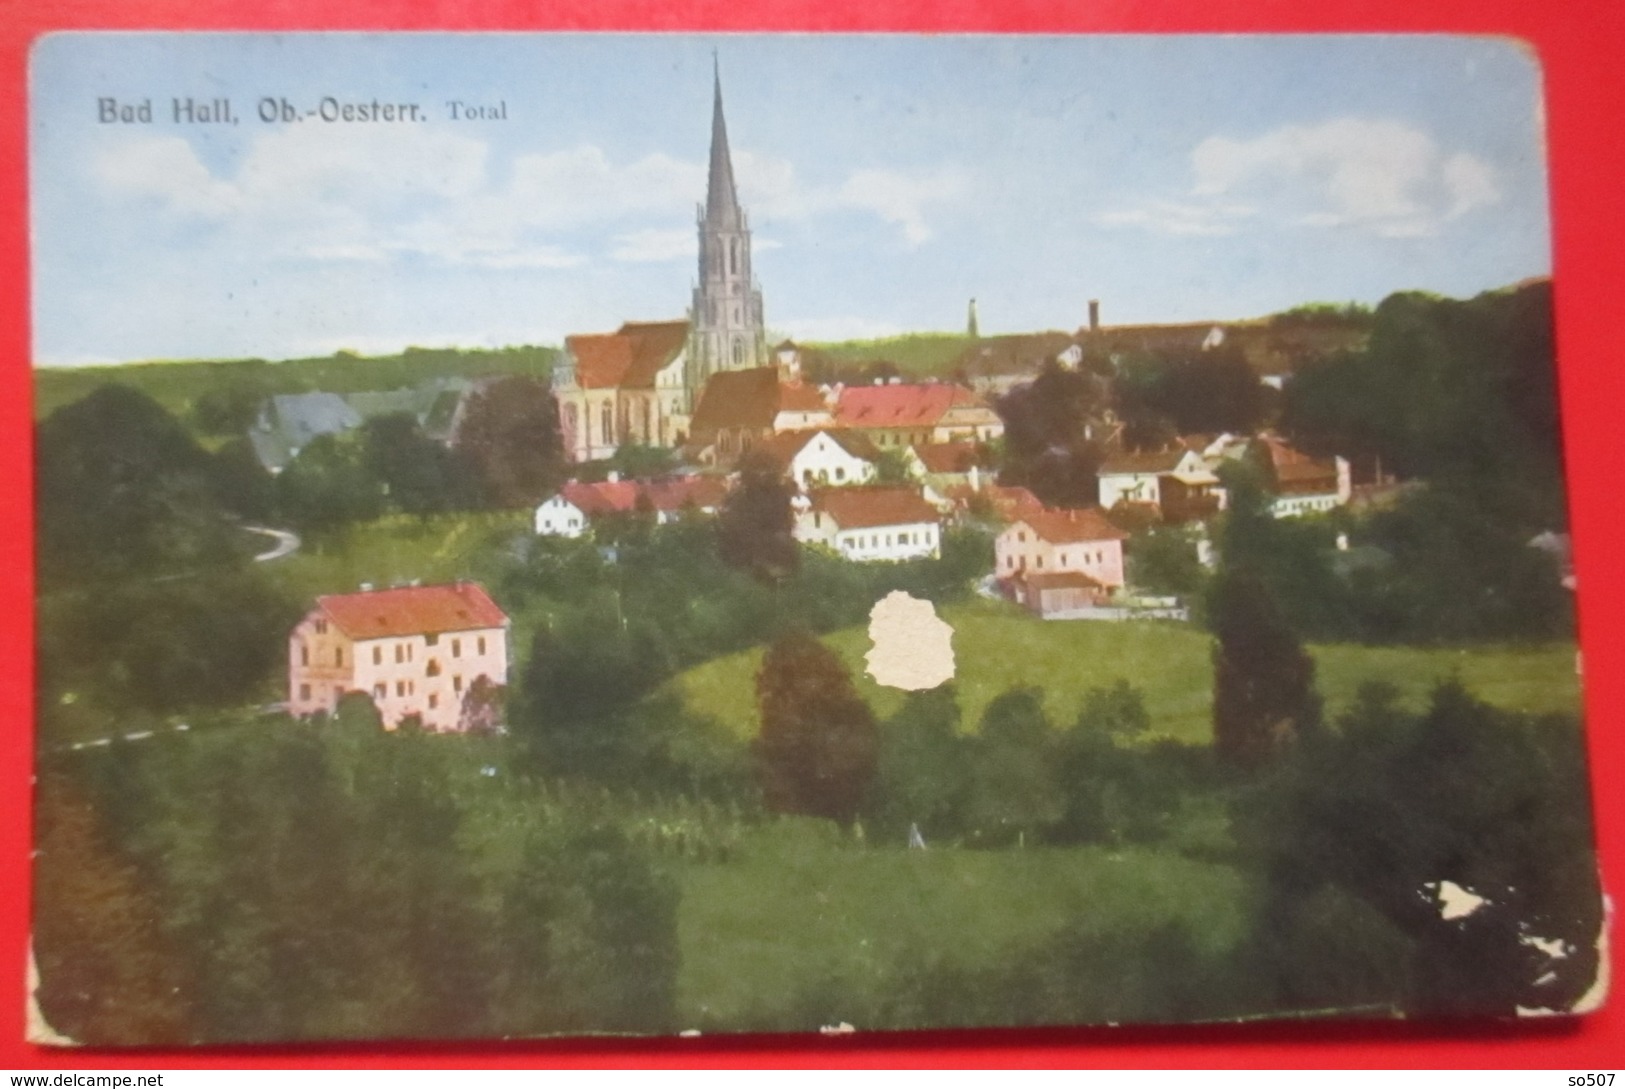 J1-Austria Vintage Postcard-Bad Hall. Ob.-Oesterr. Bad Hall - Oberosterreich, Panoramic View - Bad Hall